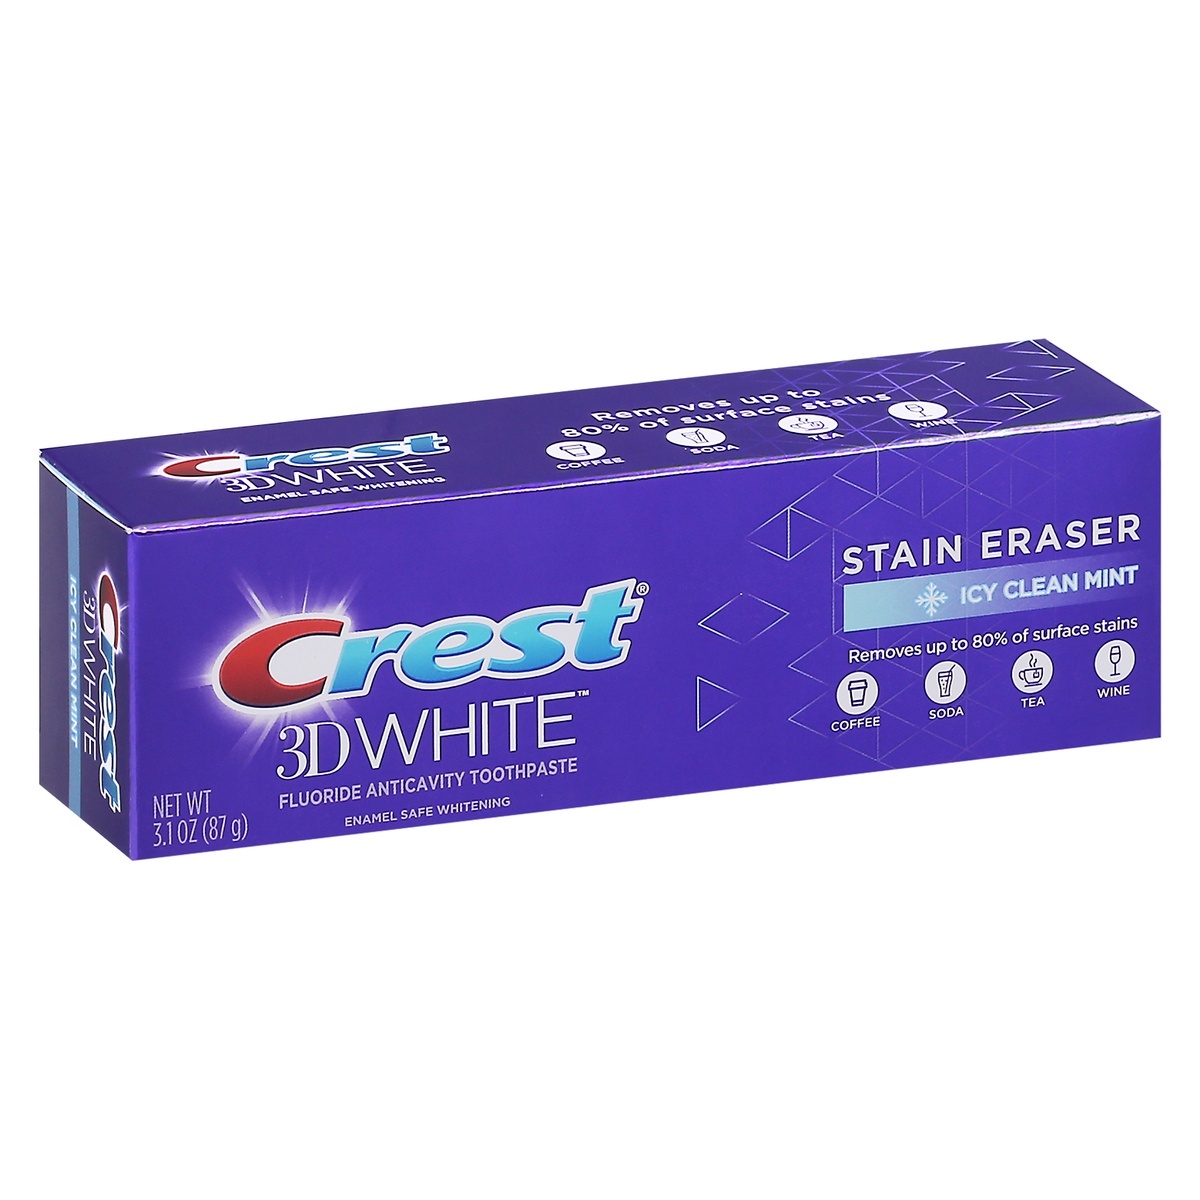 slide 1 of 1, Crest 3D White Stain Eraser Icy Clean Mint Fluoride Anticavity Toothpaste, 3.5 oz